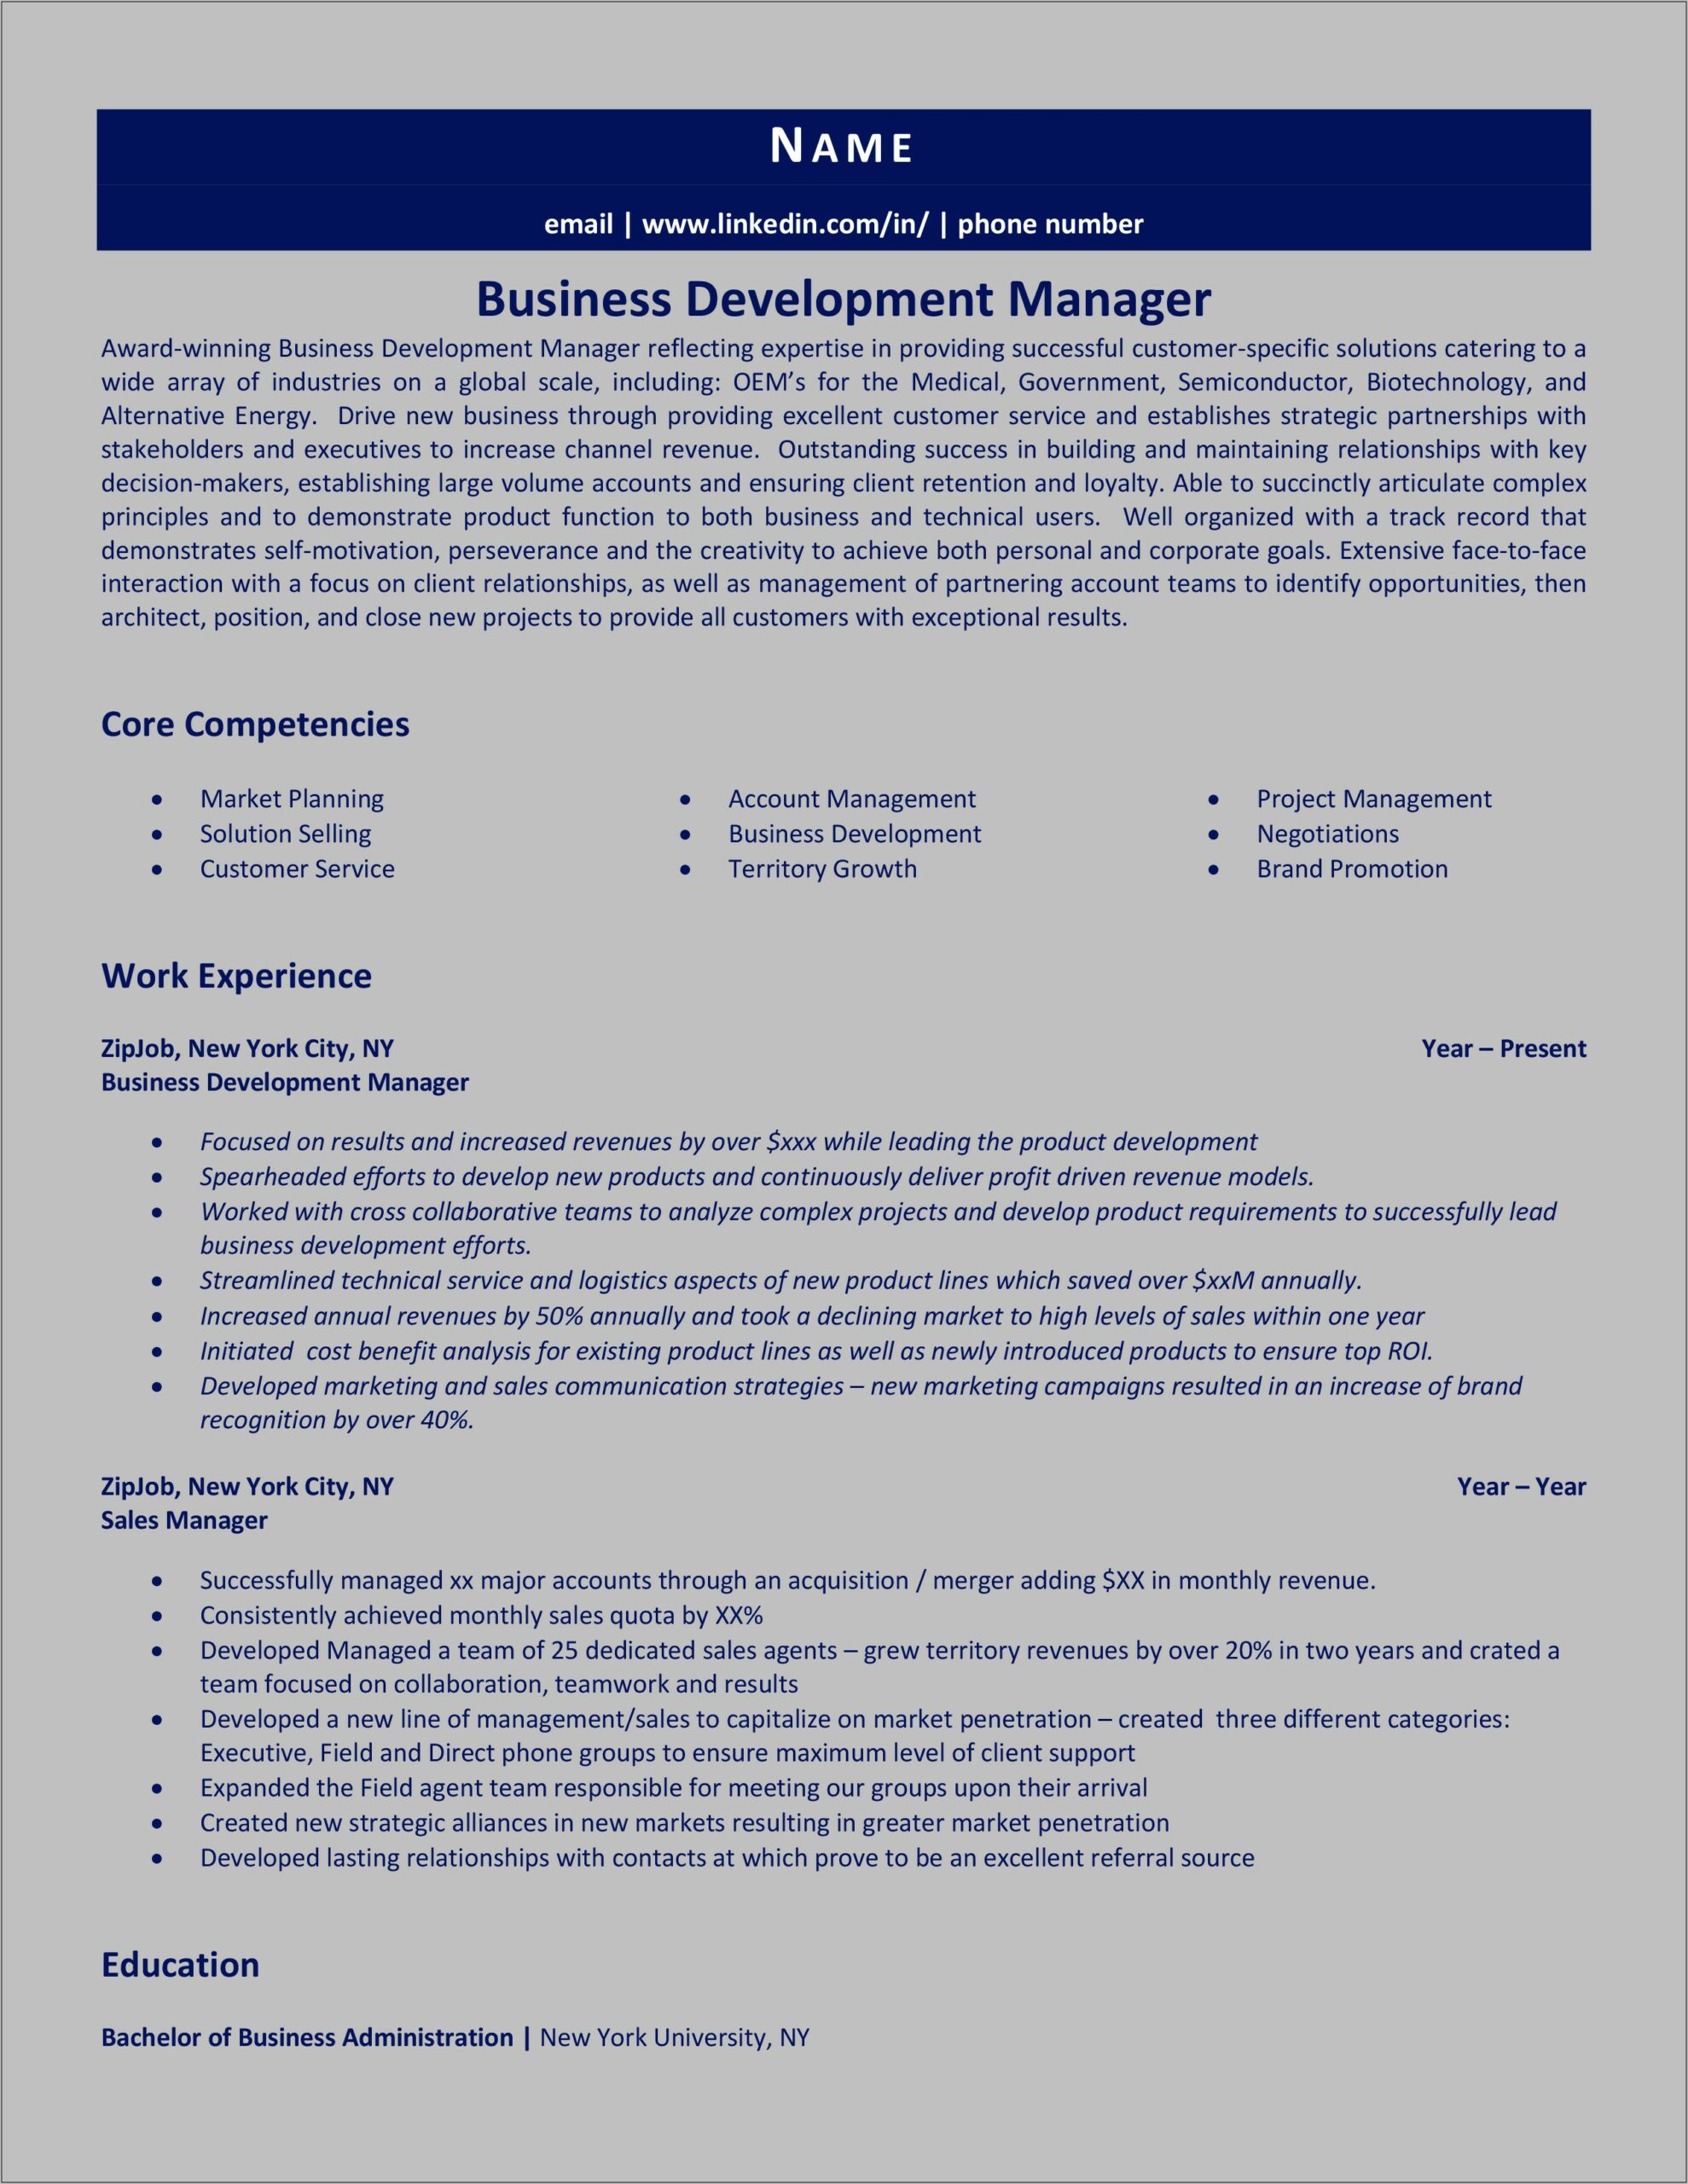 Business Development Manager Resume Doc India